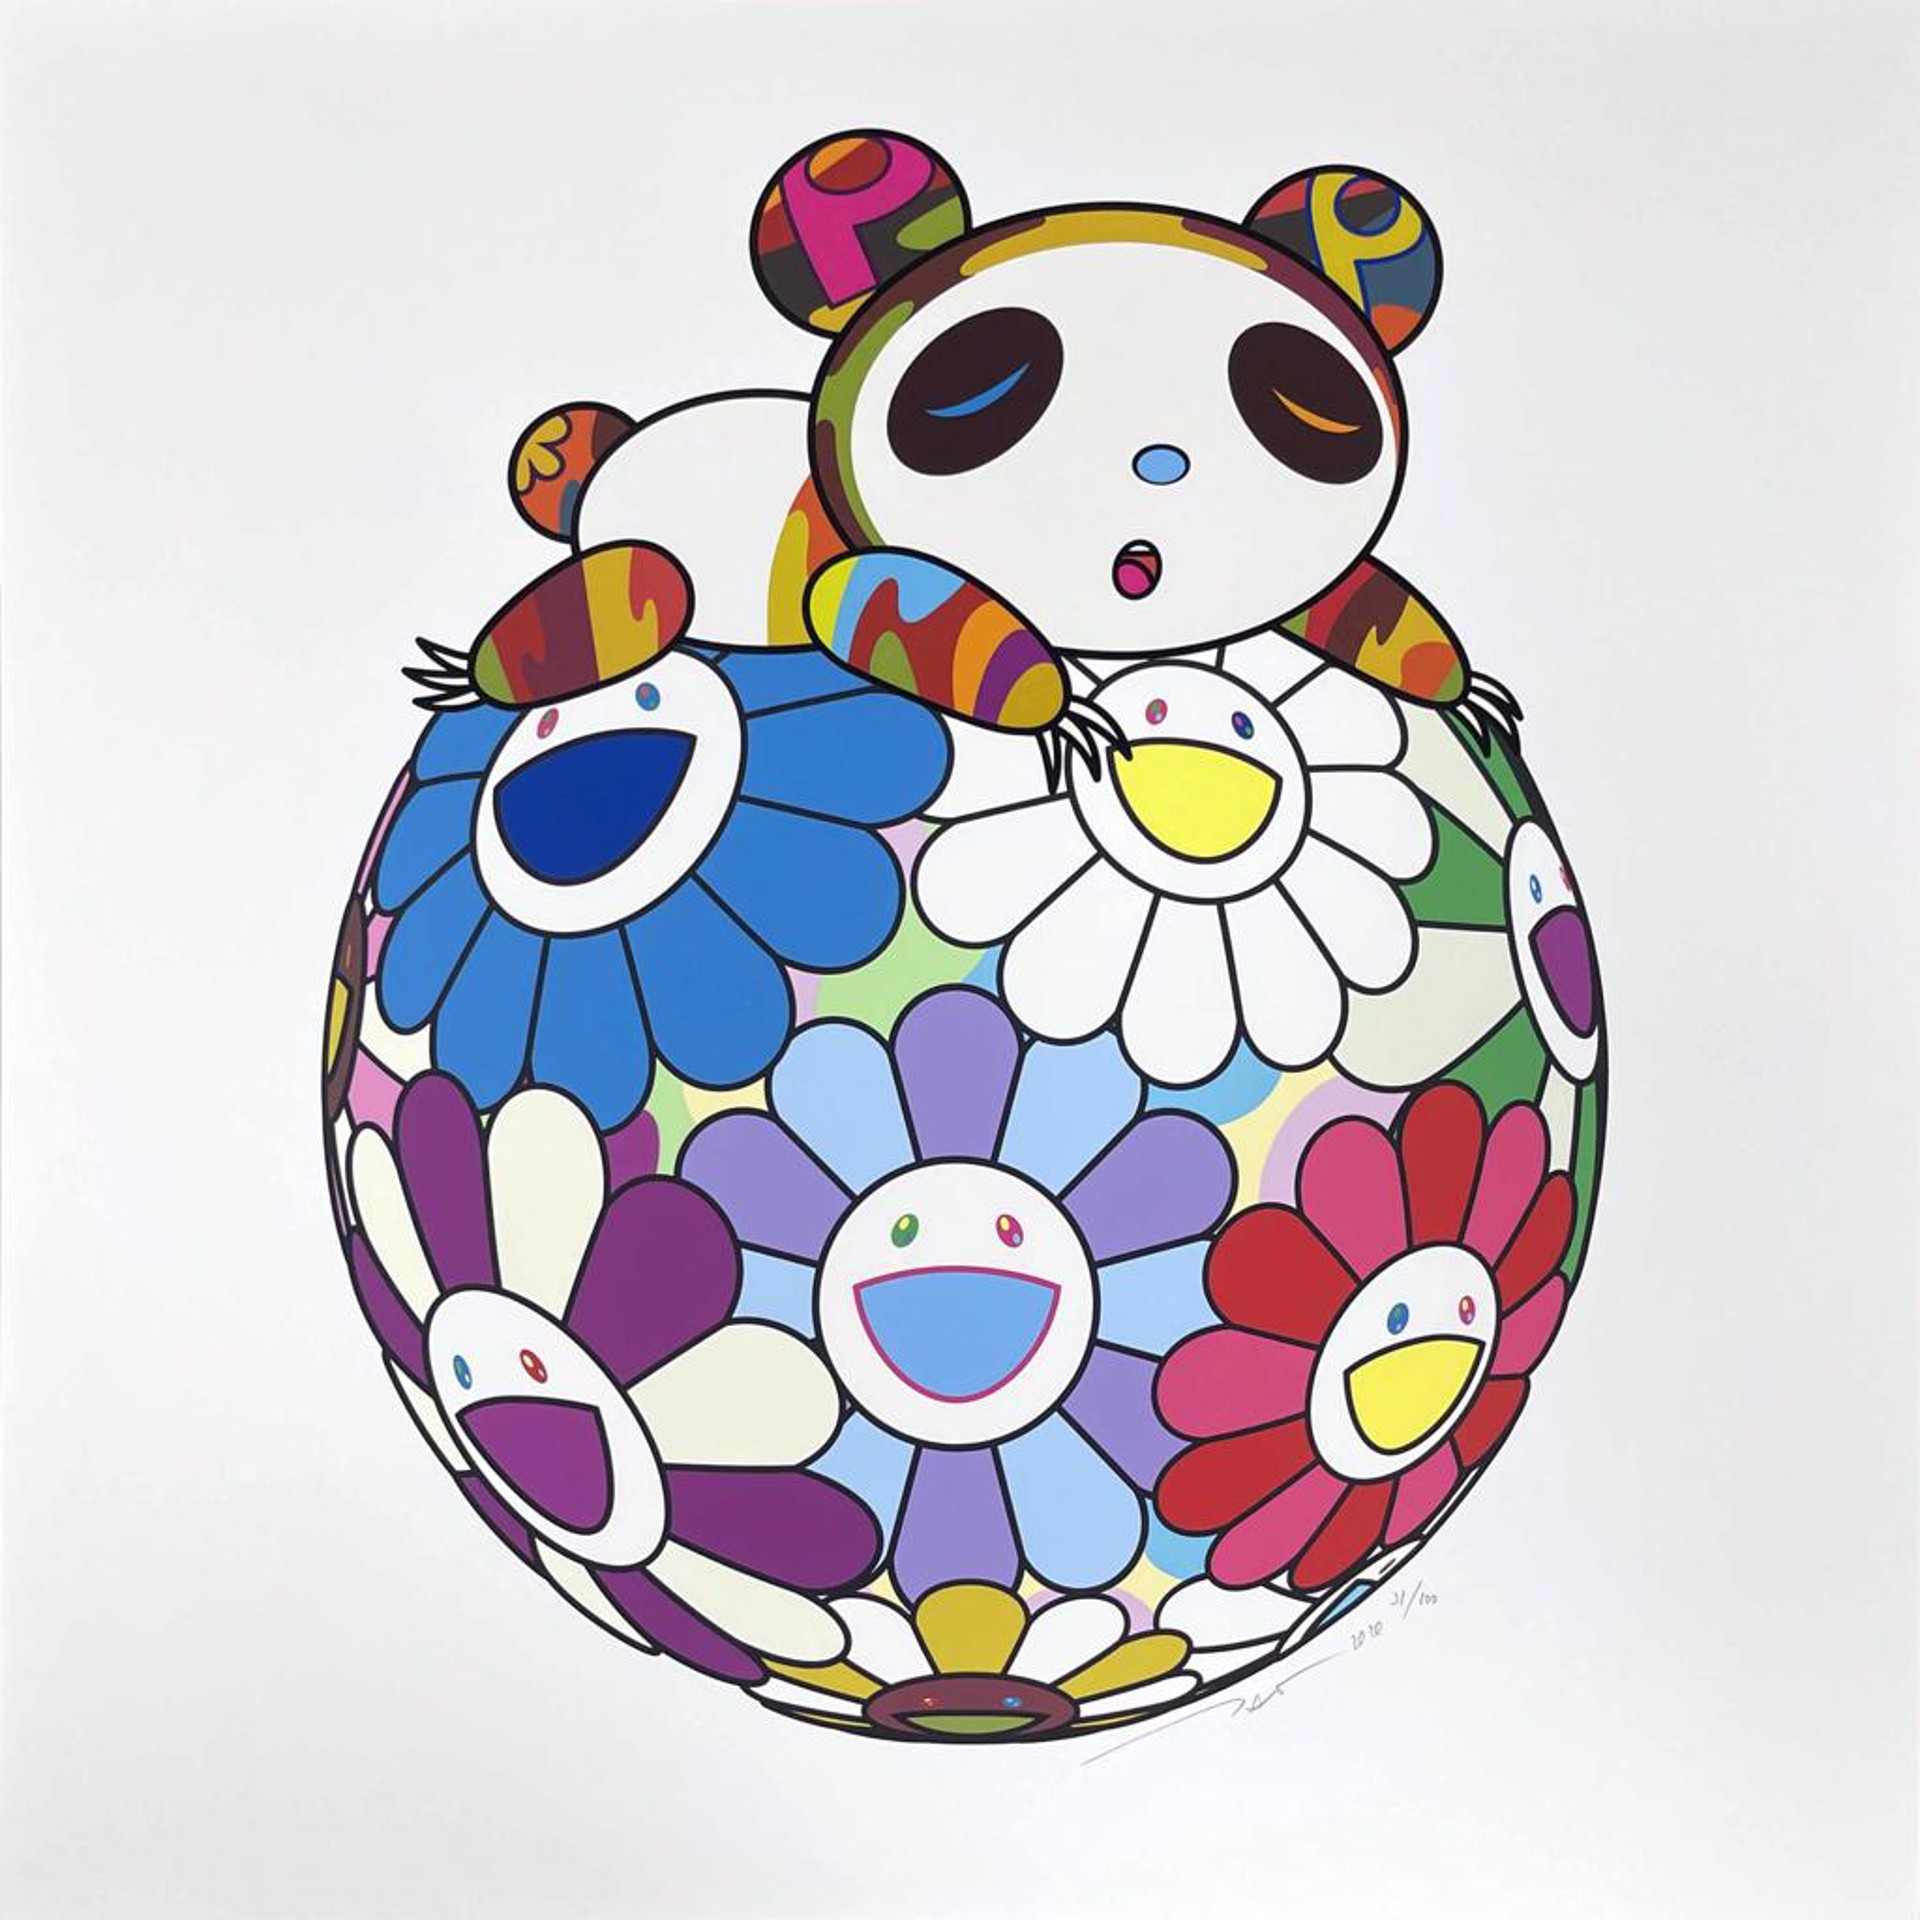 Atop a Ball of Flowers, A Panda Cub Sleeps Soundly by Takashi Murakami